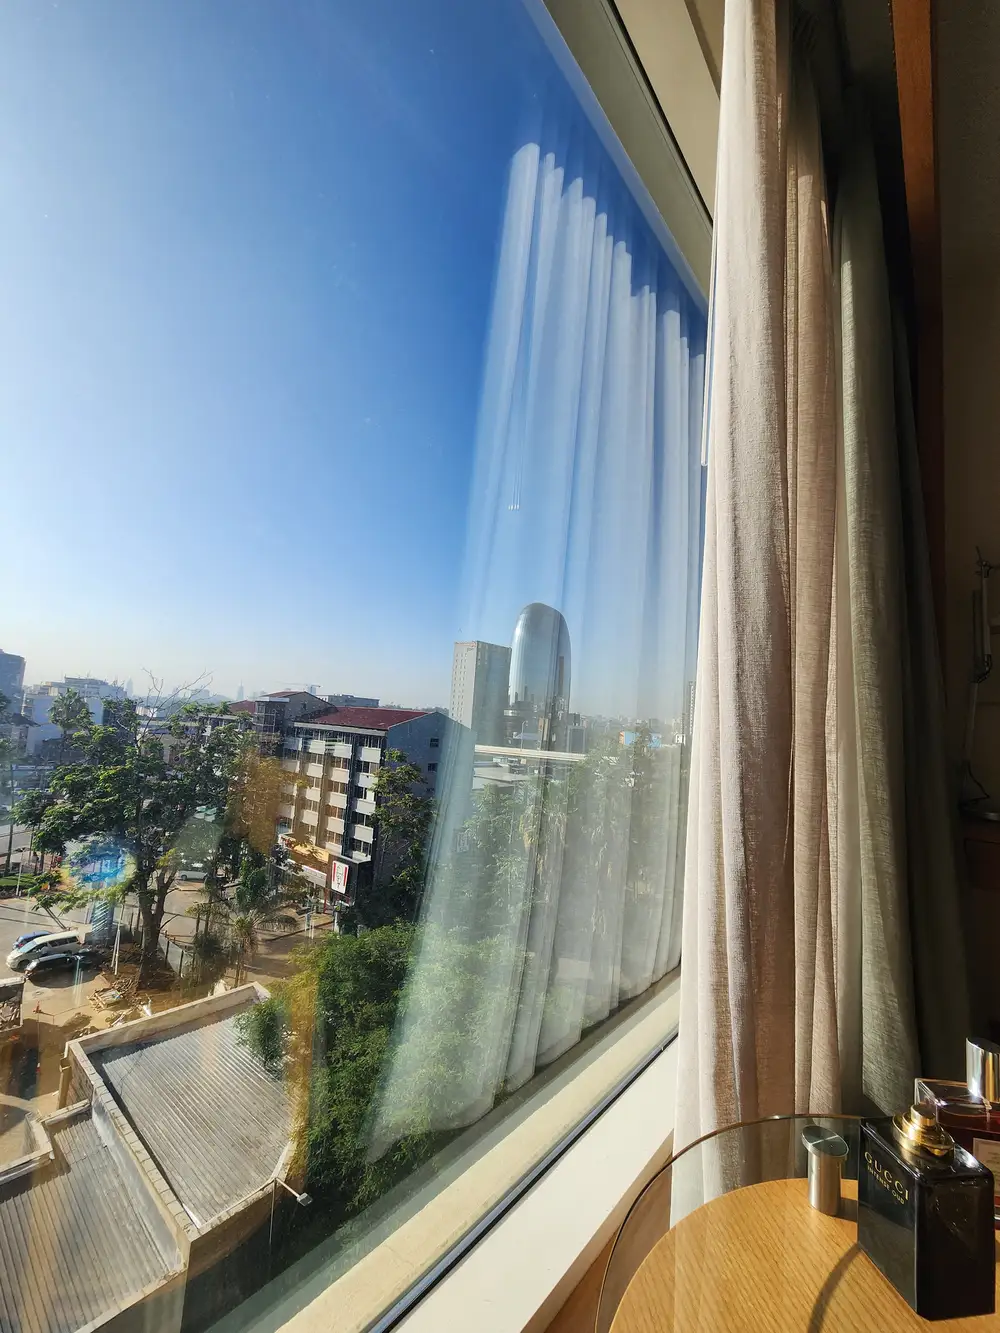 Window view of a metropolitan area